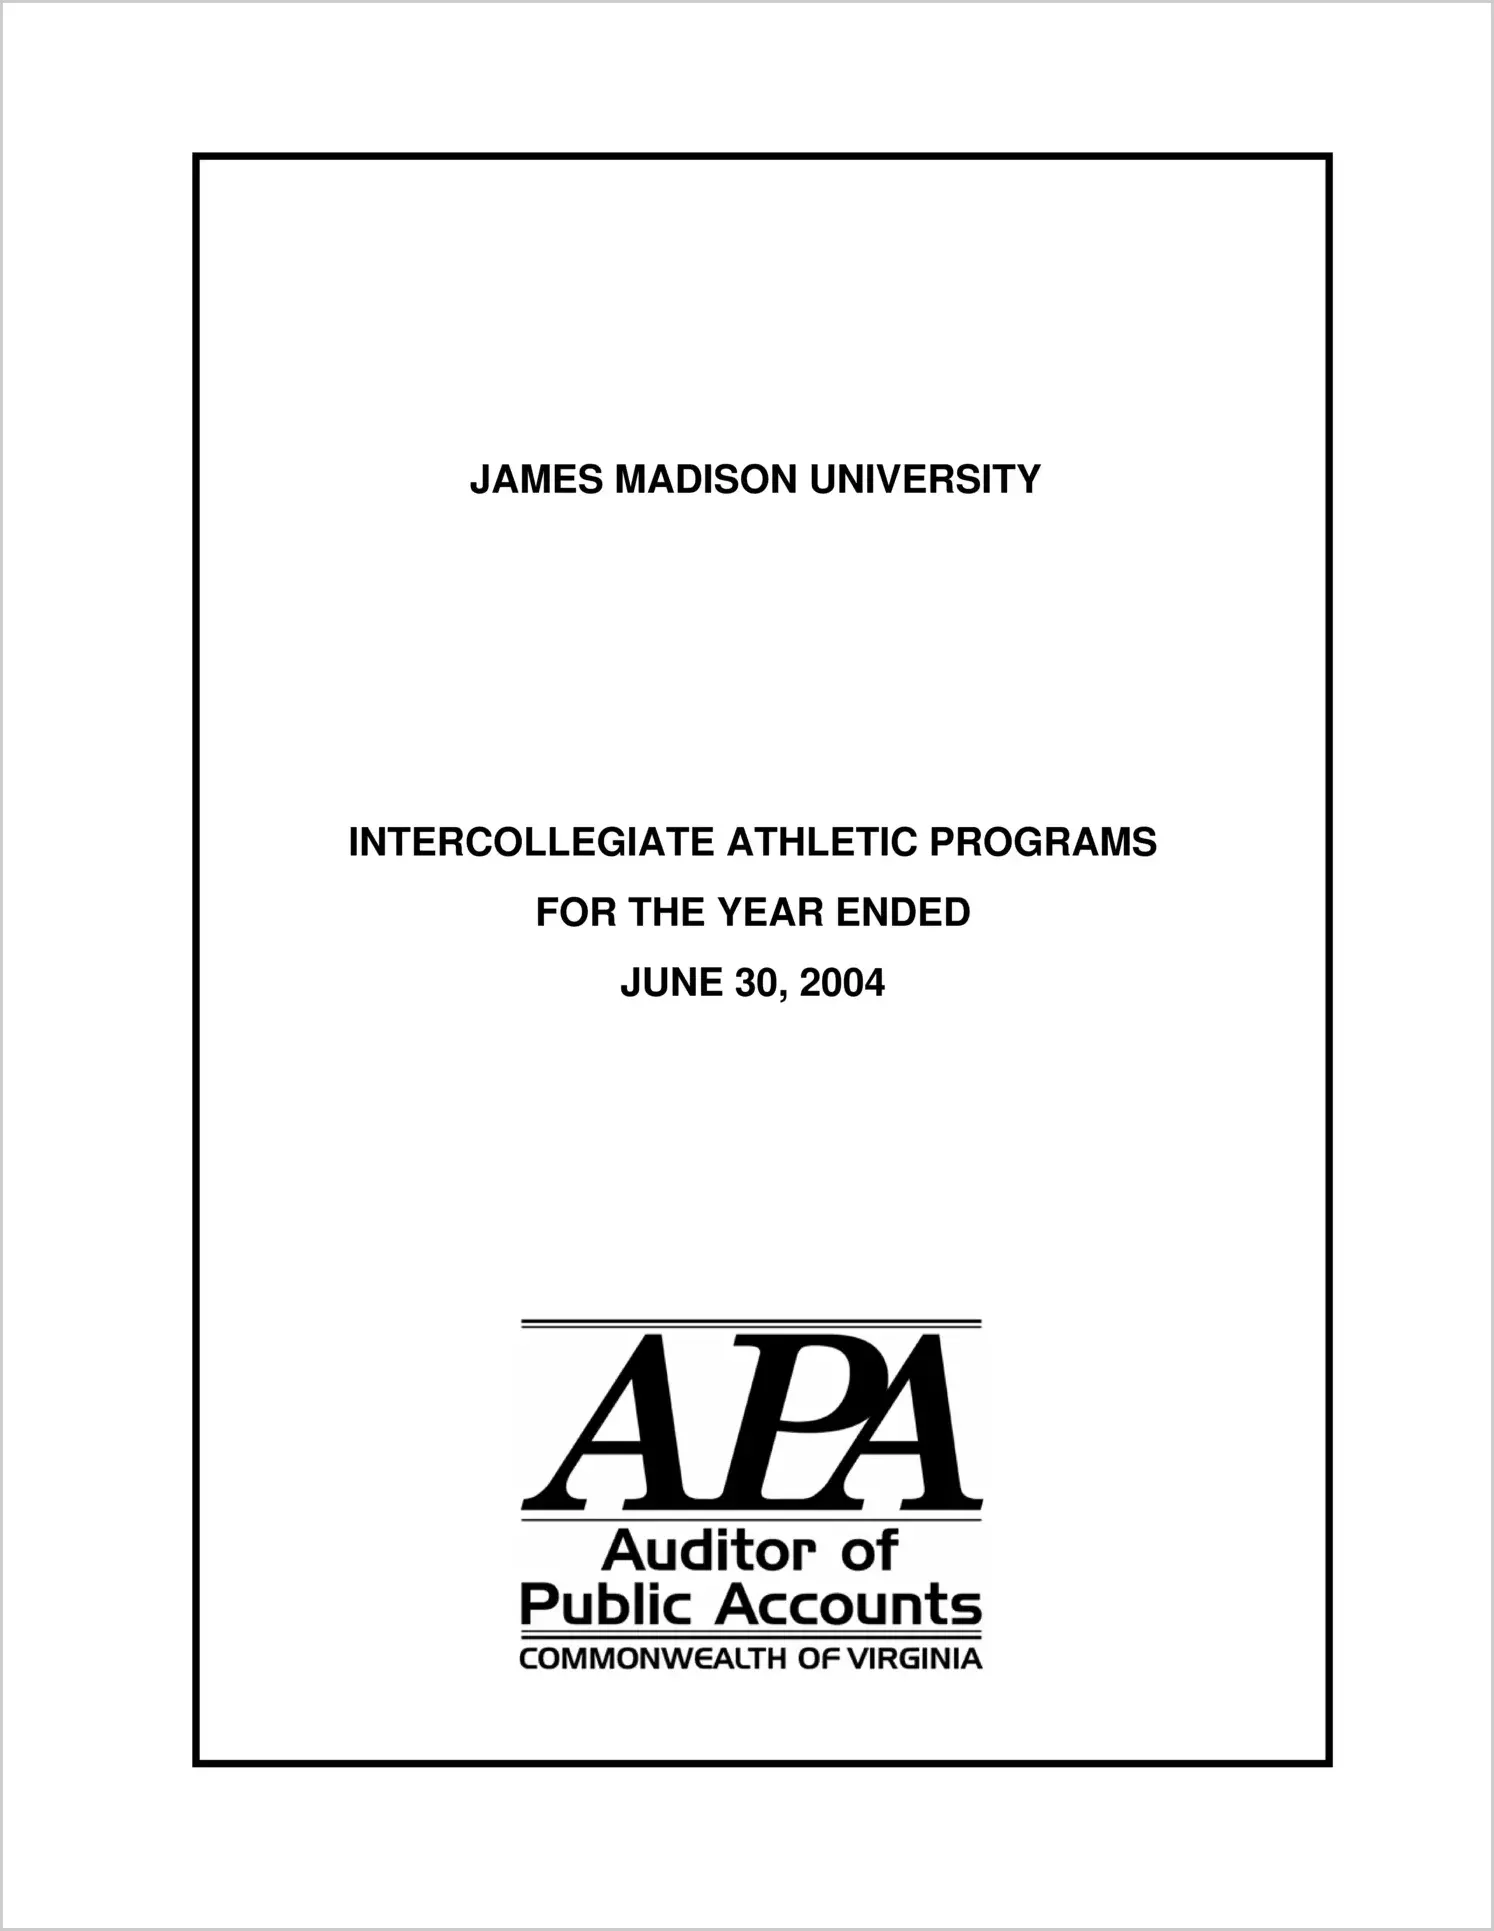 James Madison University Intercollegiate Athletic Programs for the year ended June 30, 2004